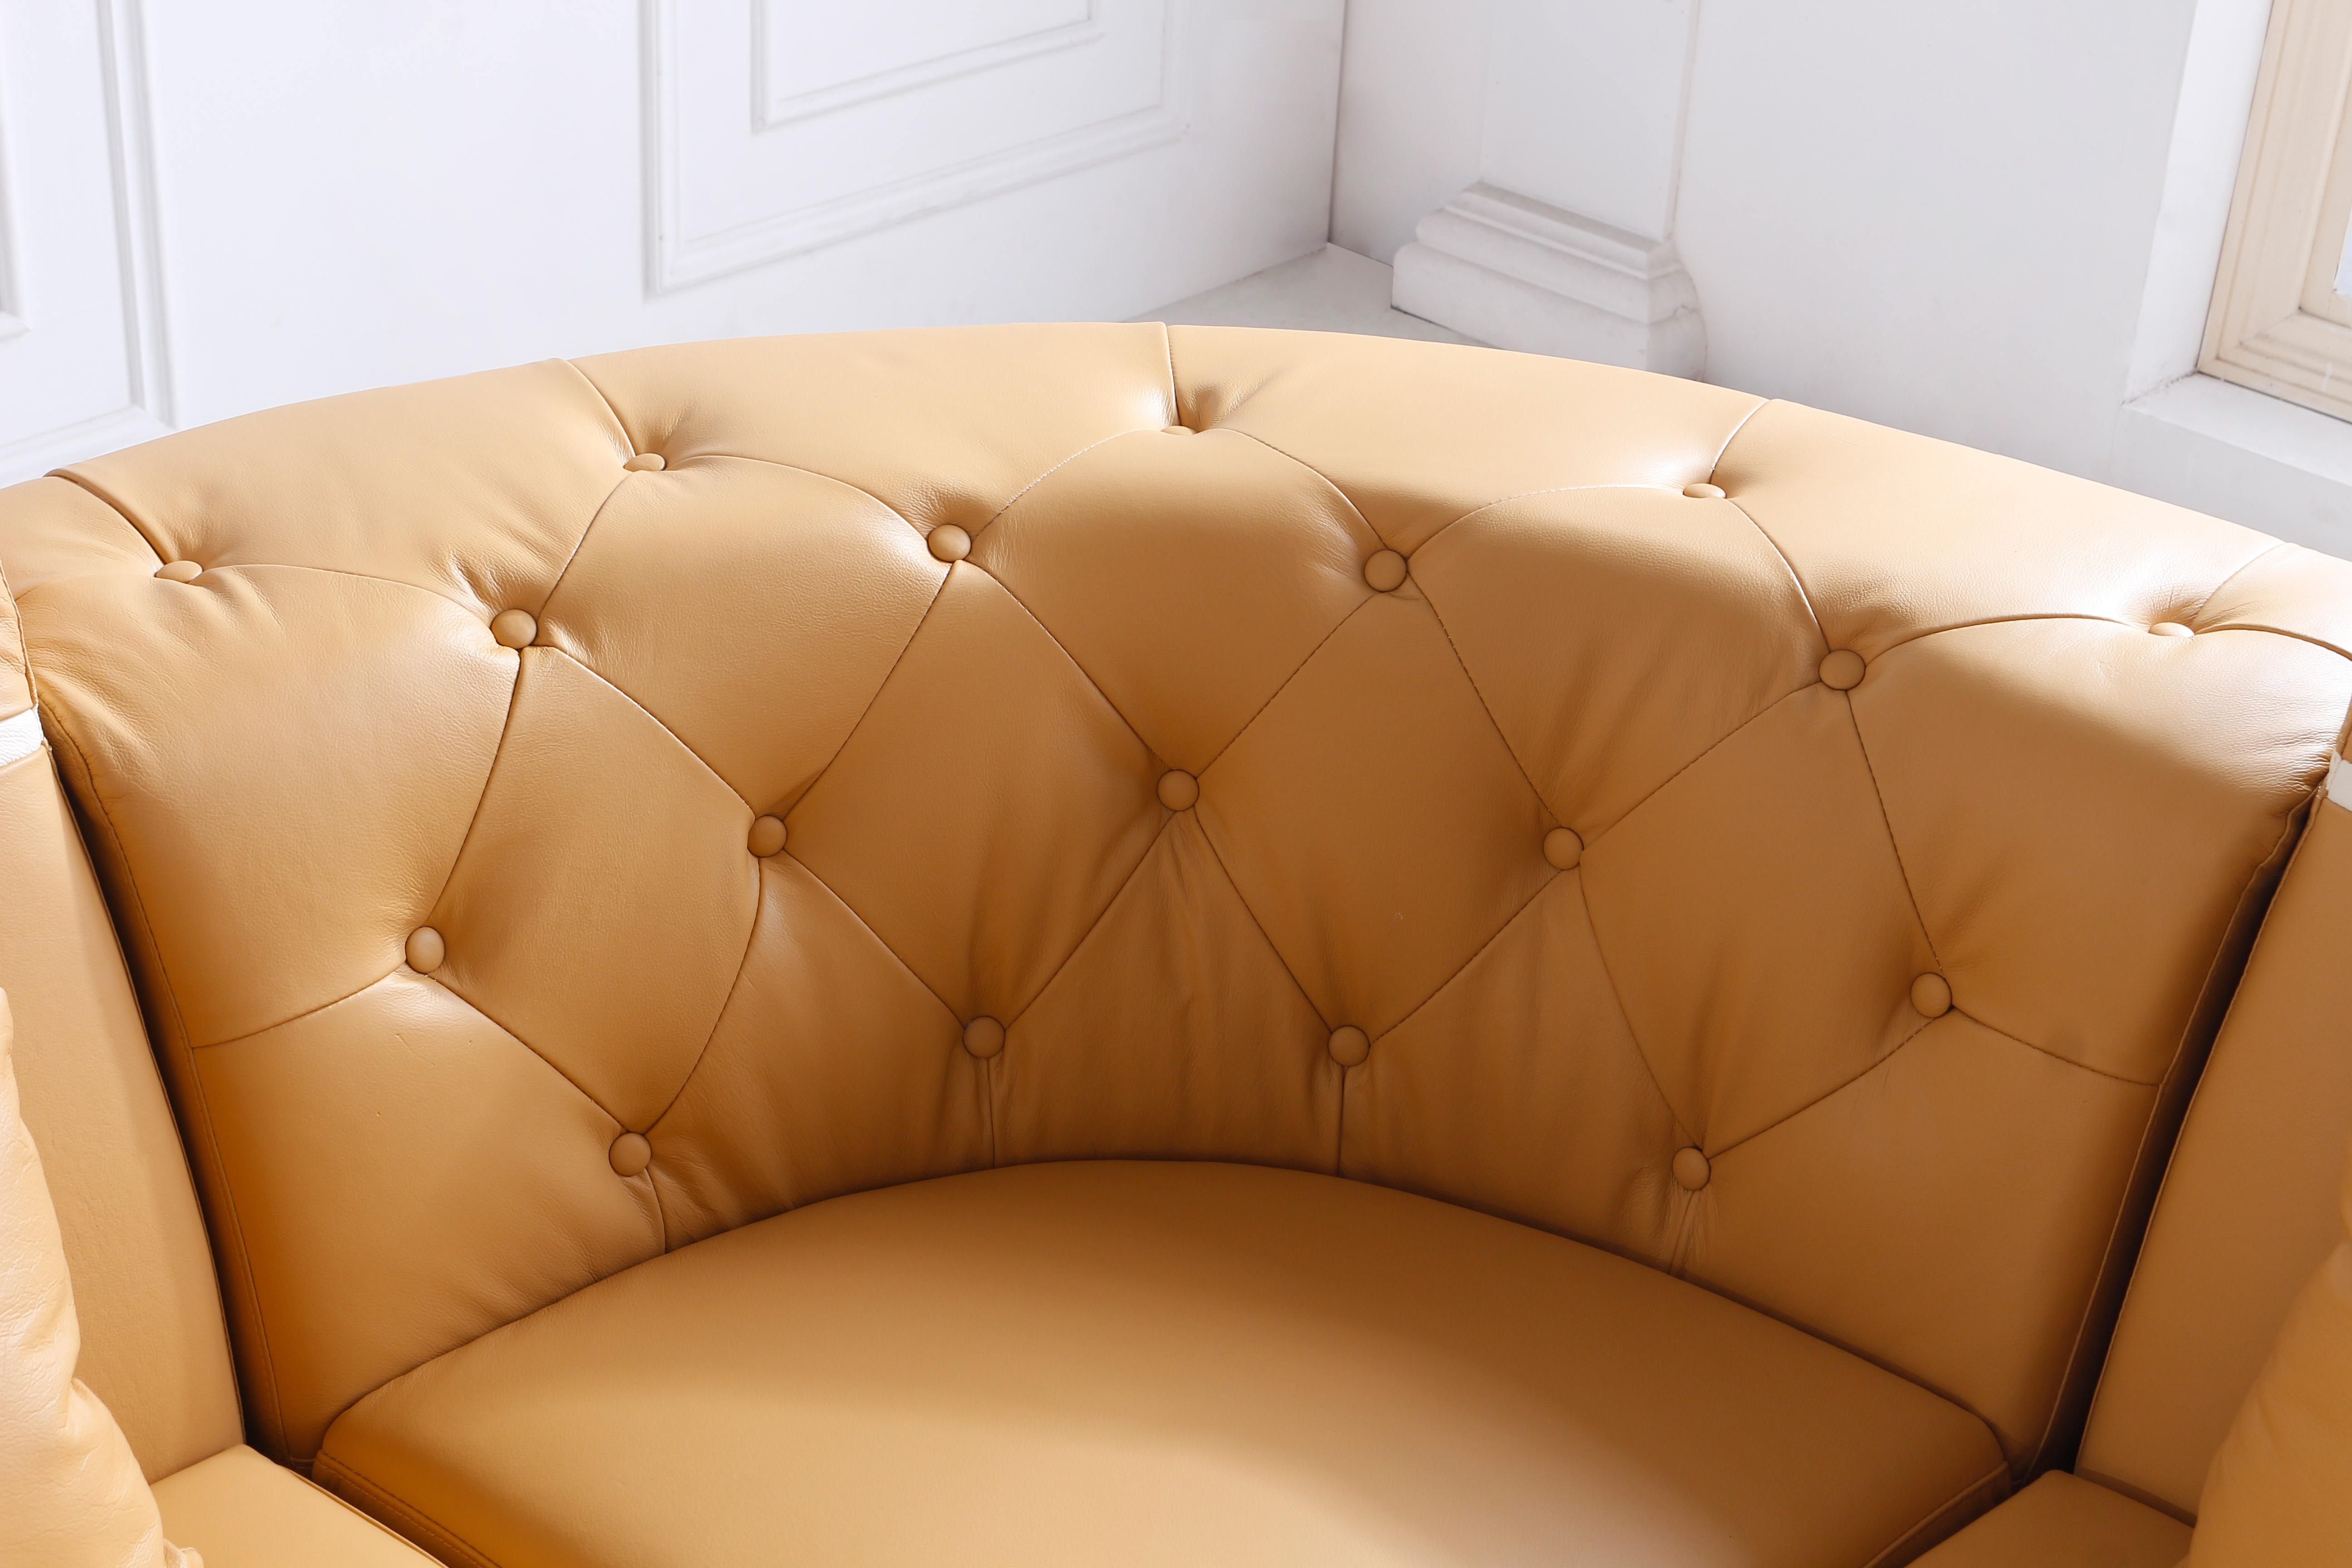 Grand canapé de salon confortable gris marron